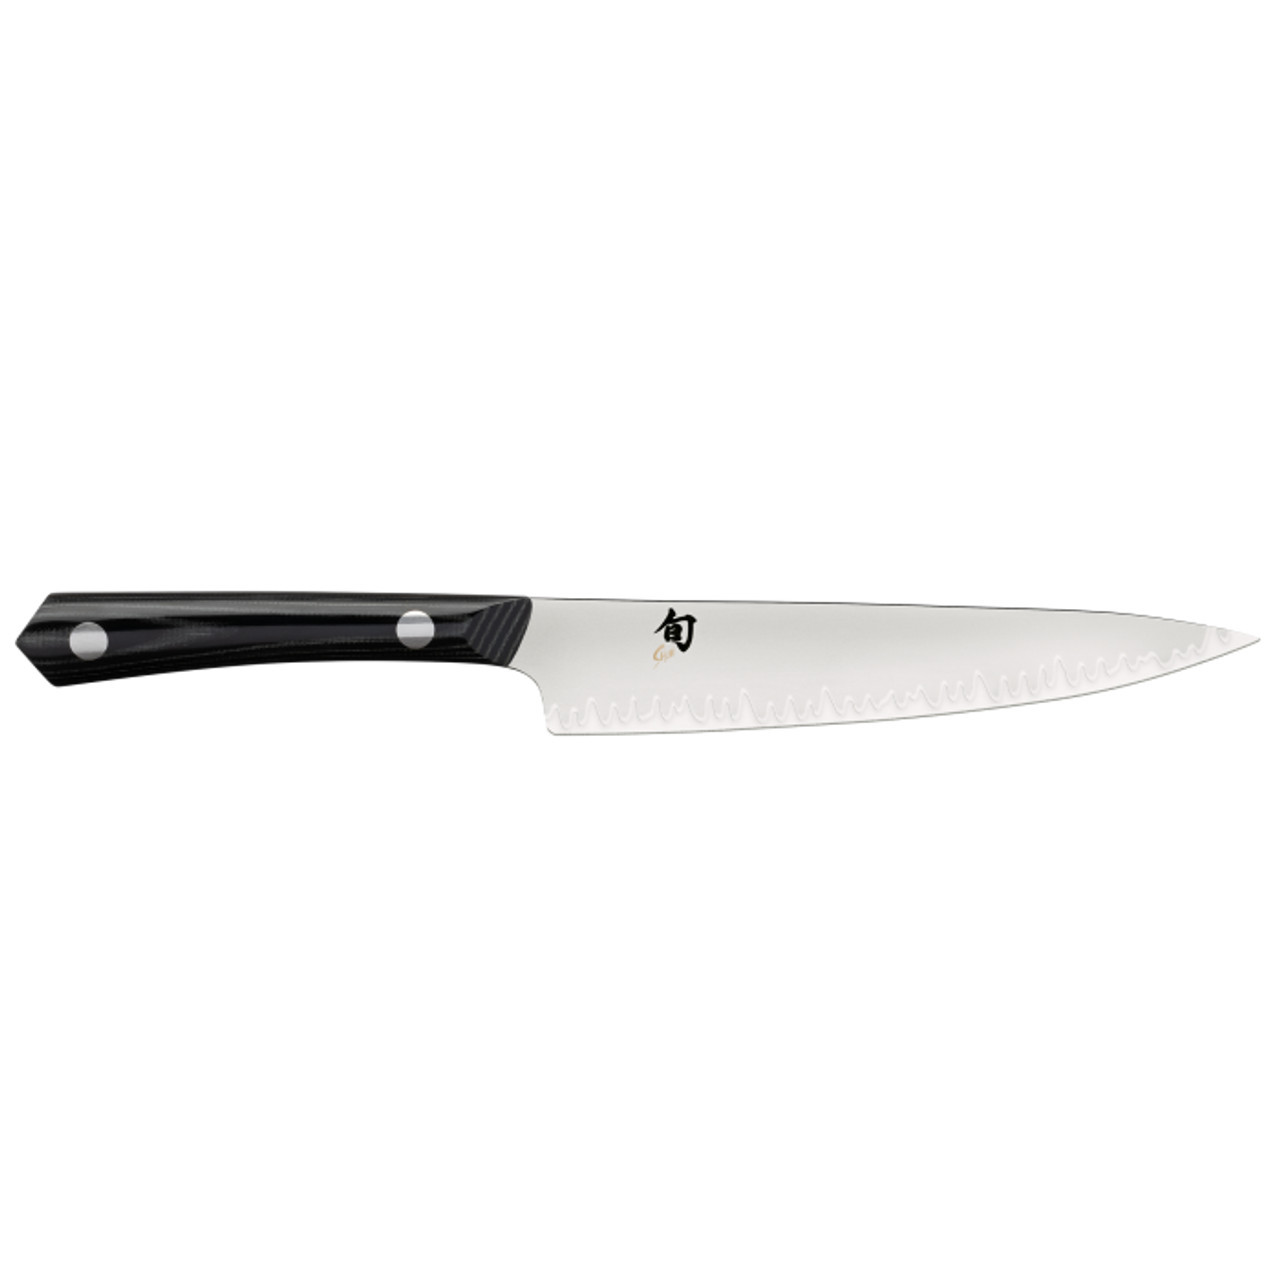 Shun NARUKAMI 6 in Utility Knife